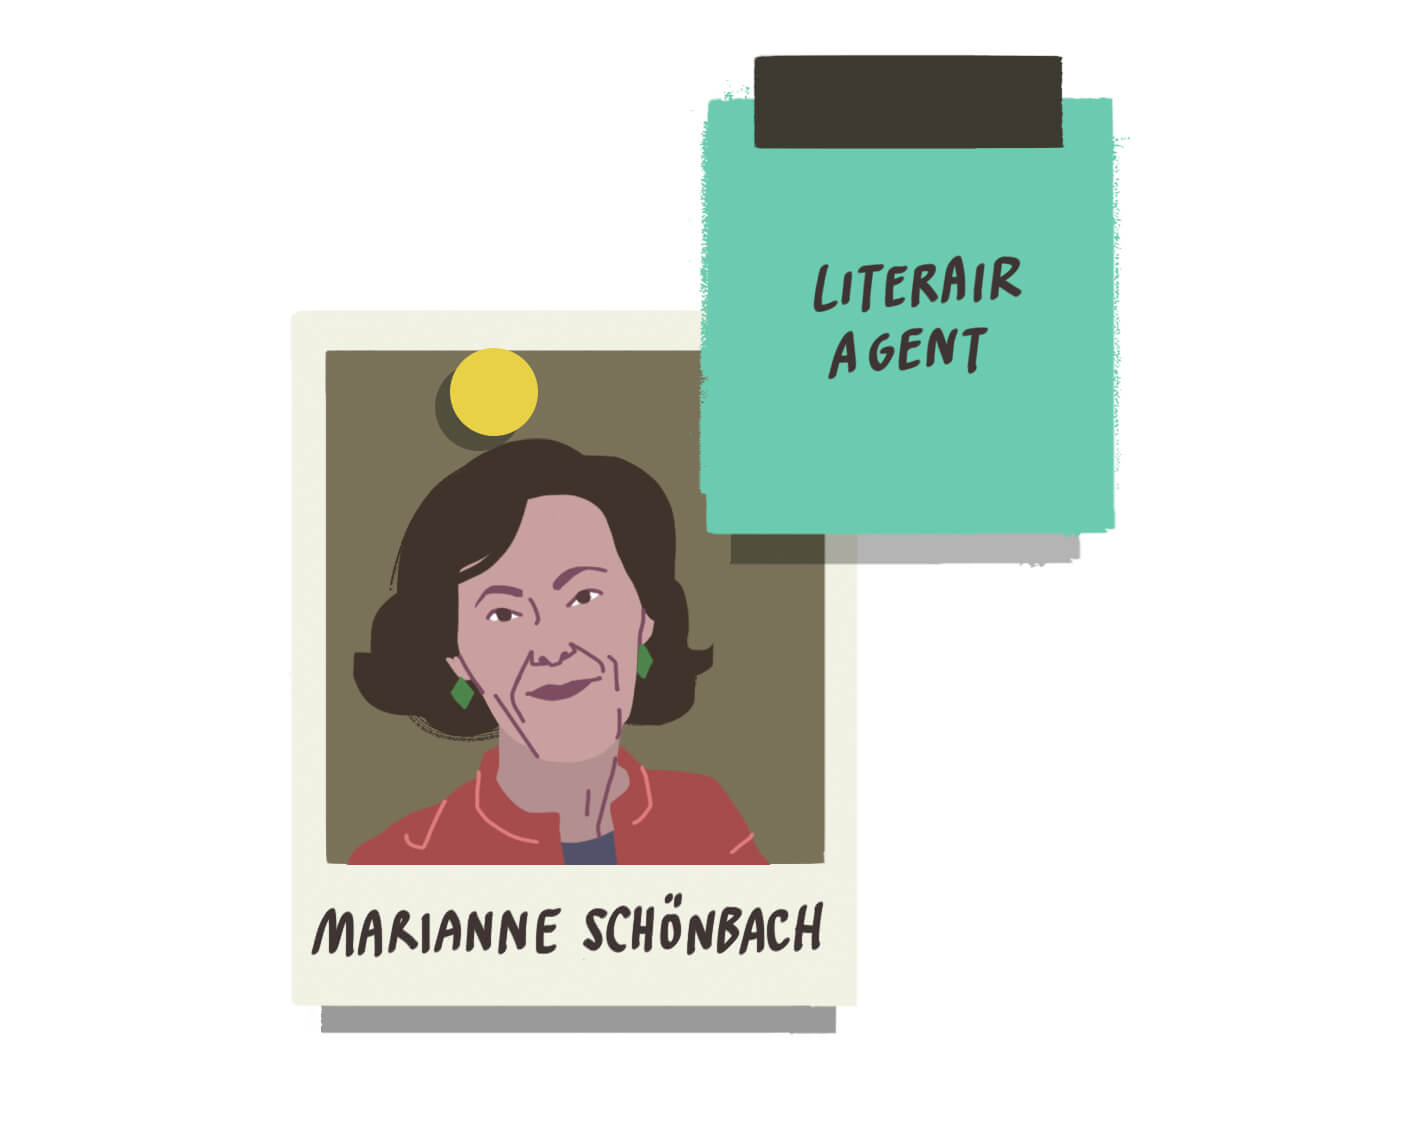 polaroid portrait of Marianne Schonbach